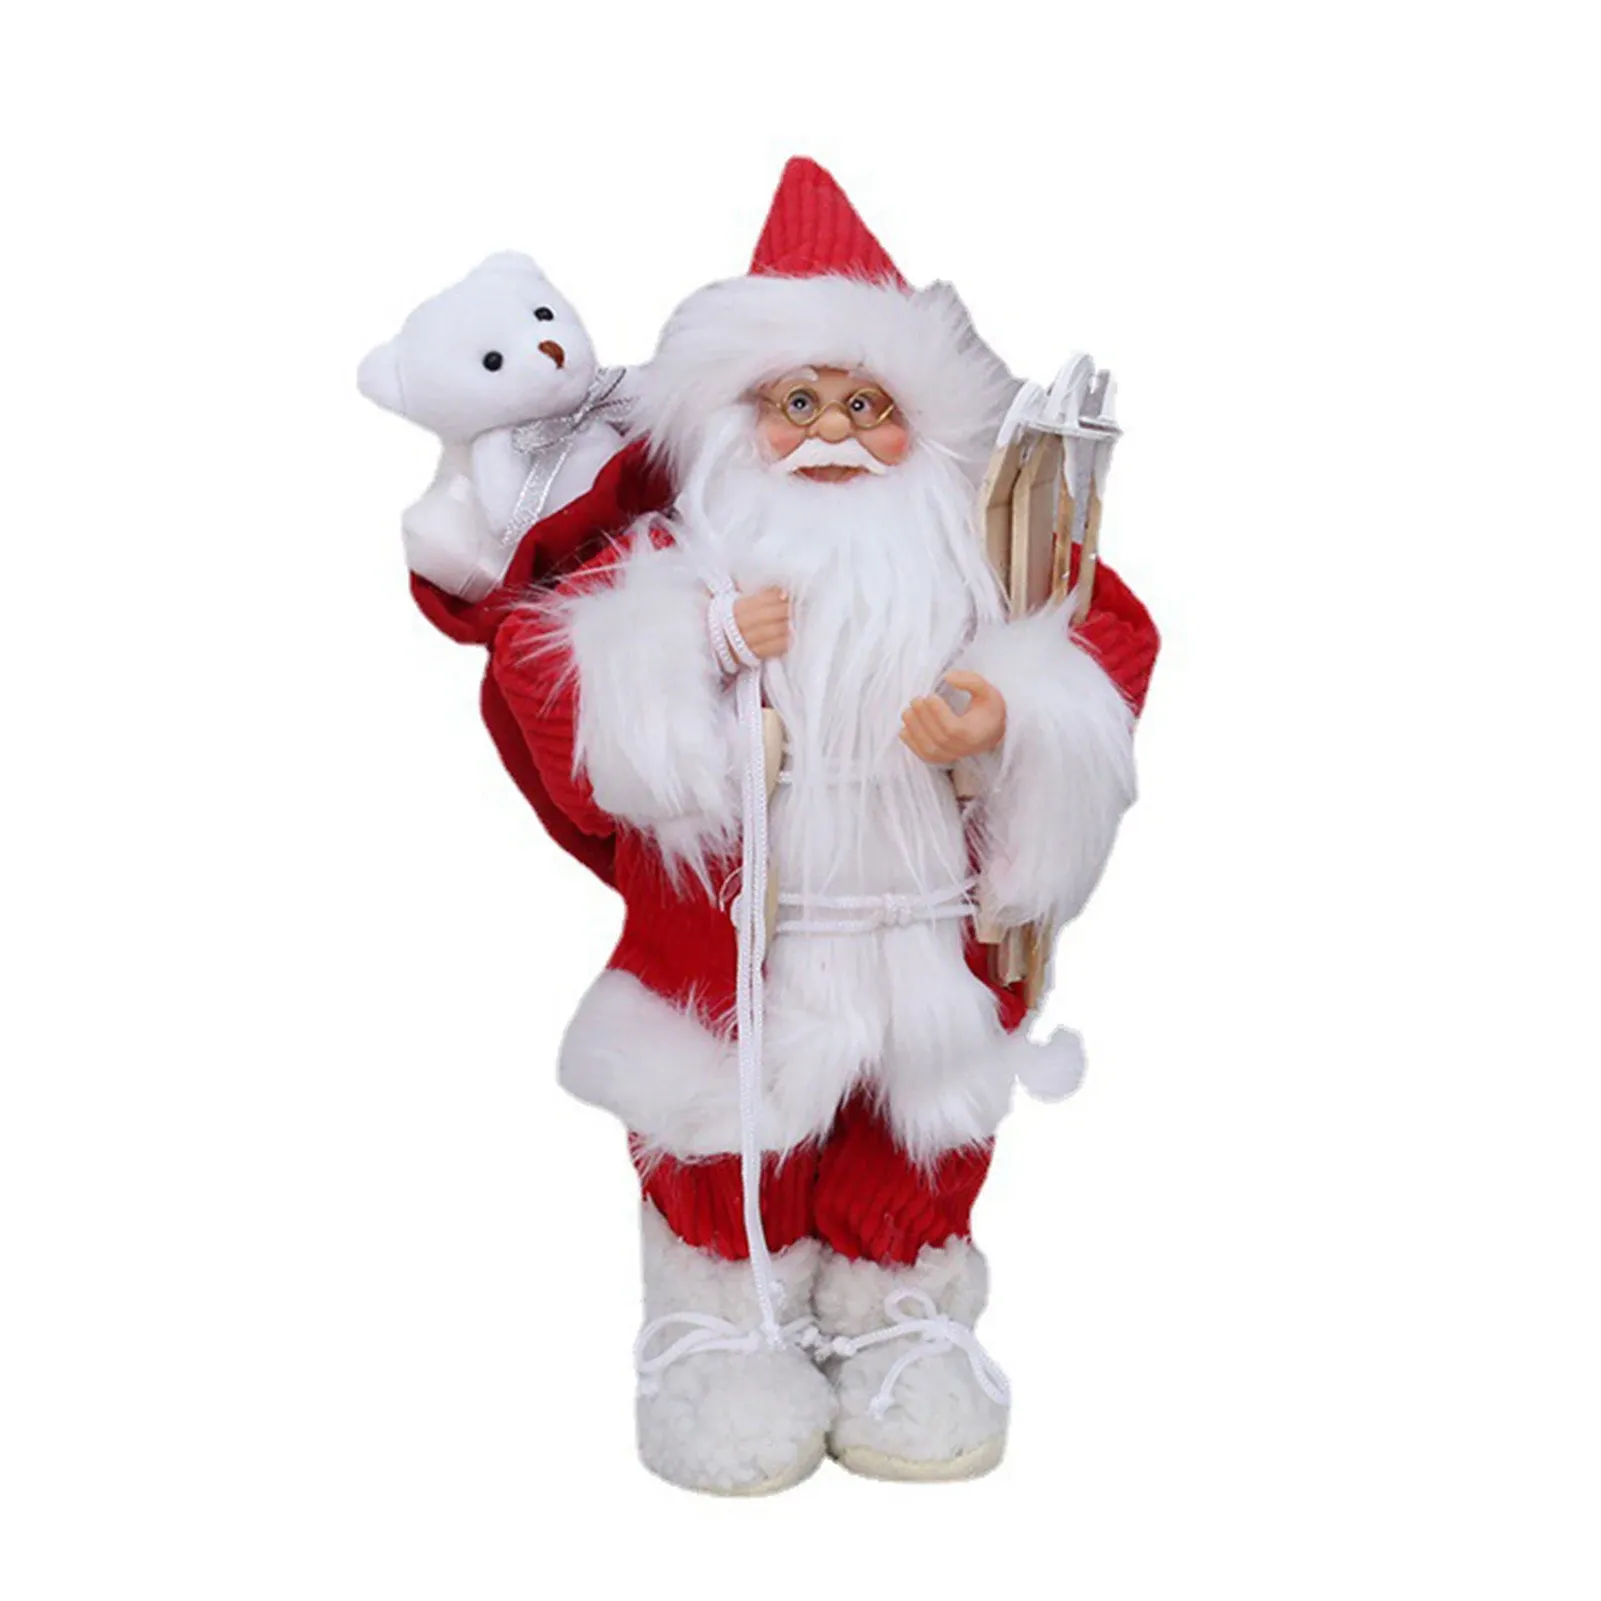 Miniatyrer julplyschleksaker 12 tum simulering Santa figur Standing Doll Holiday Party Ornament